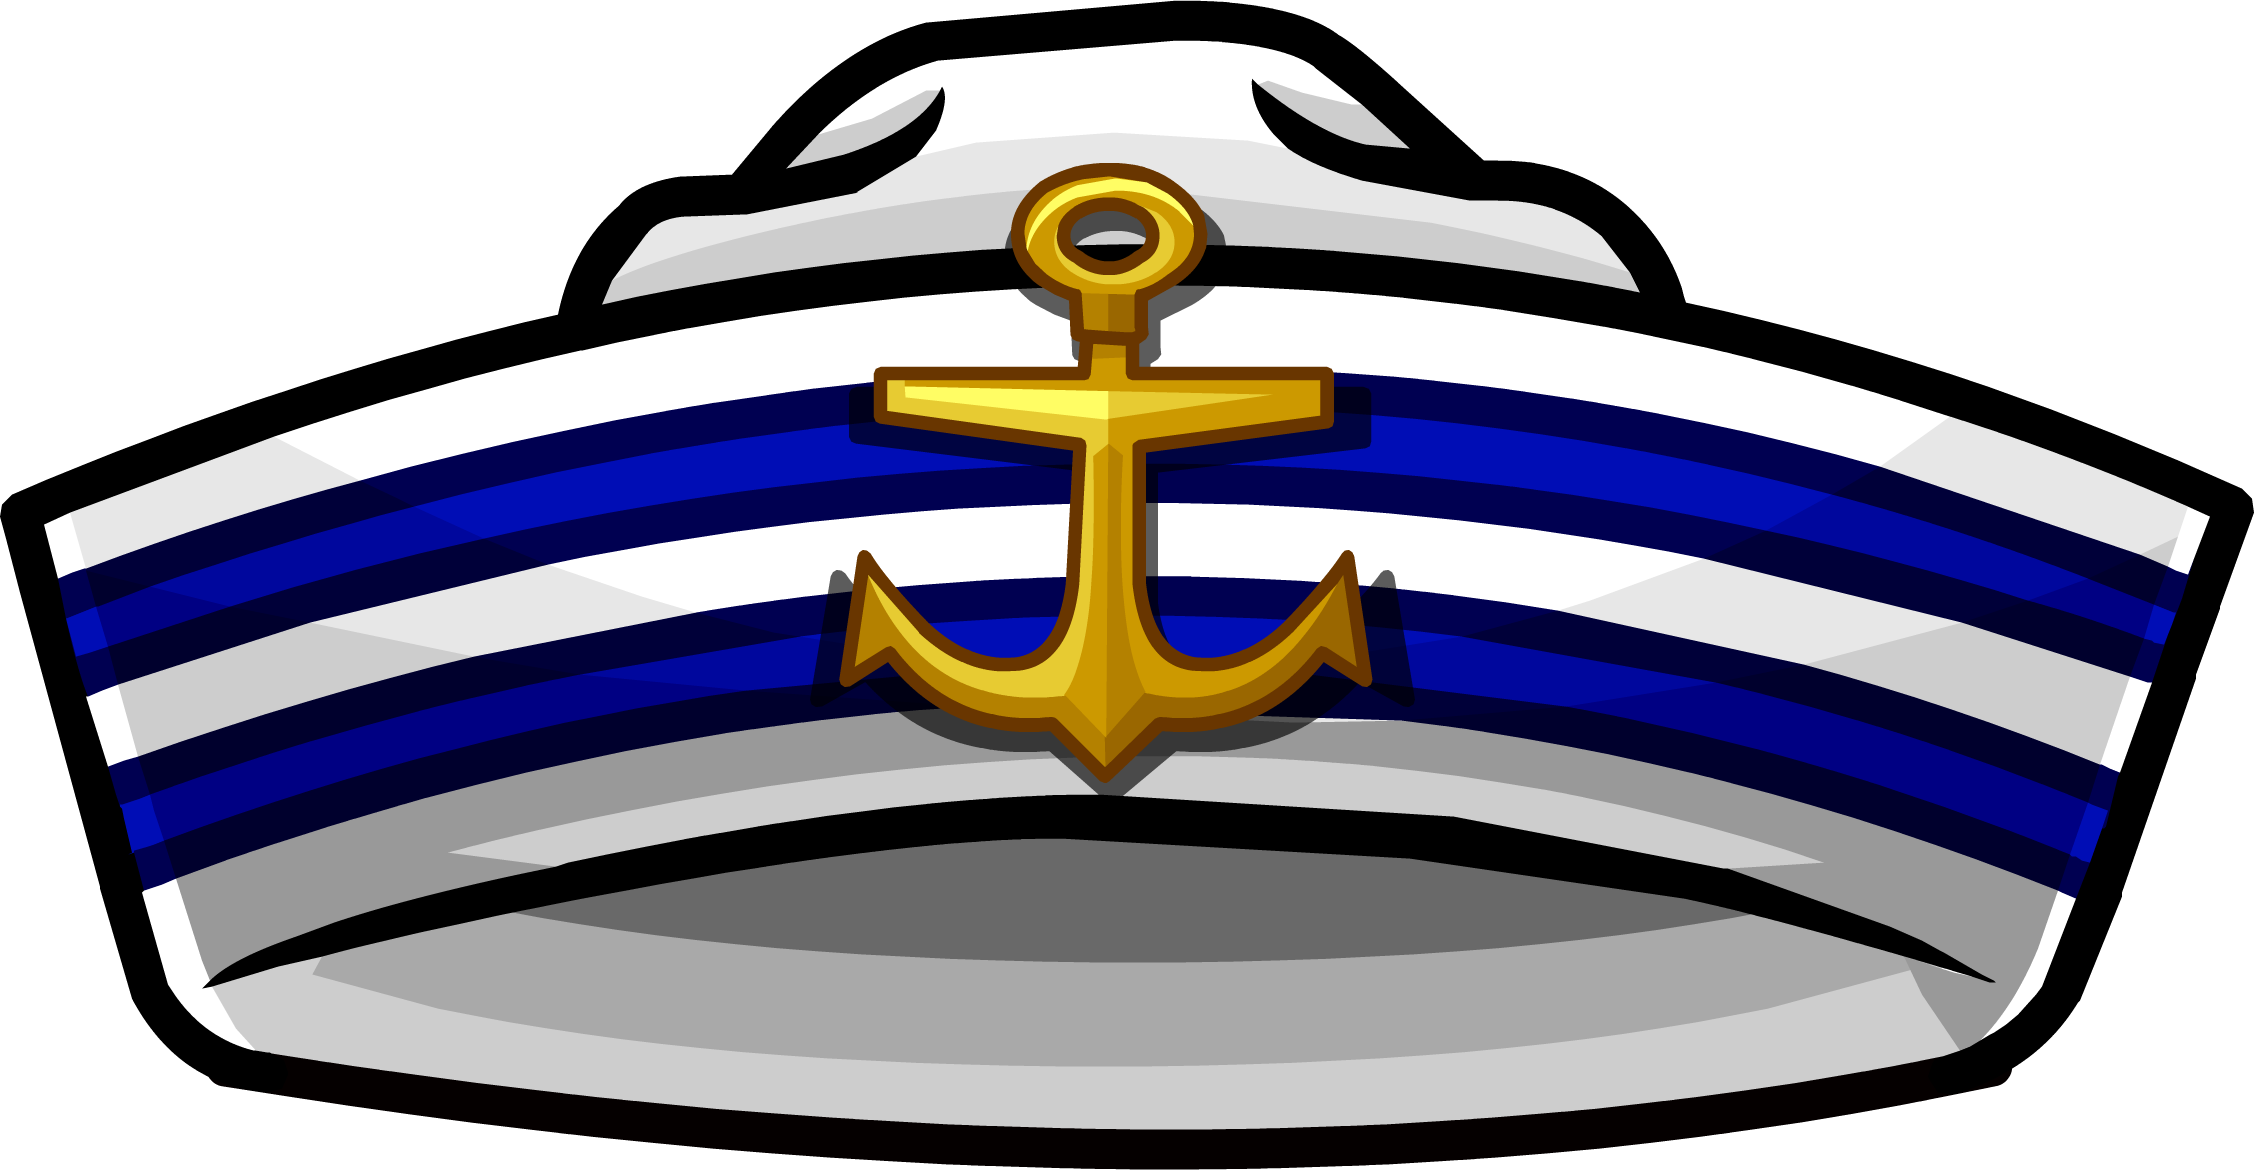 Navy Cap Captain Free Download Image PNG Image